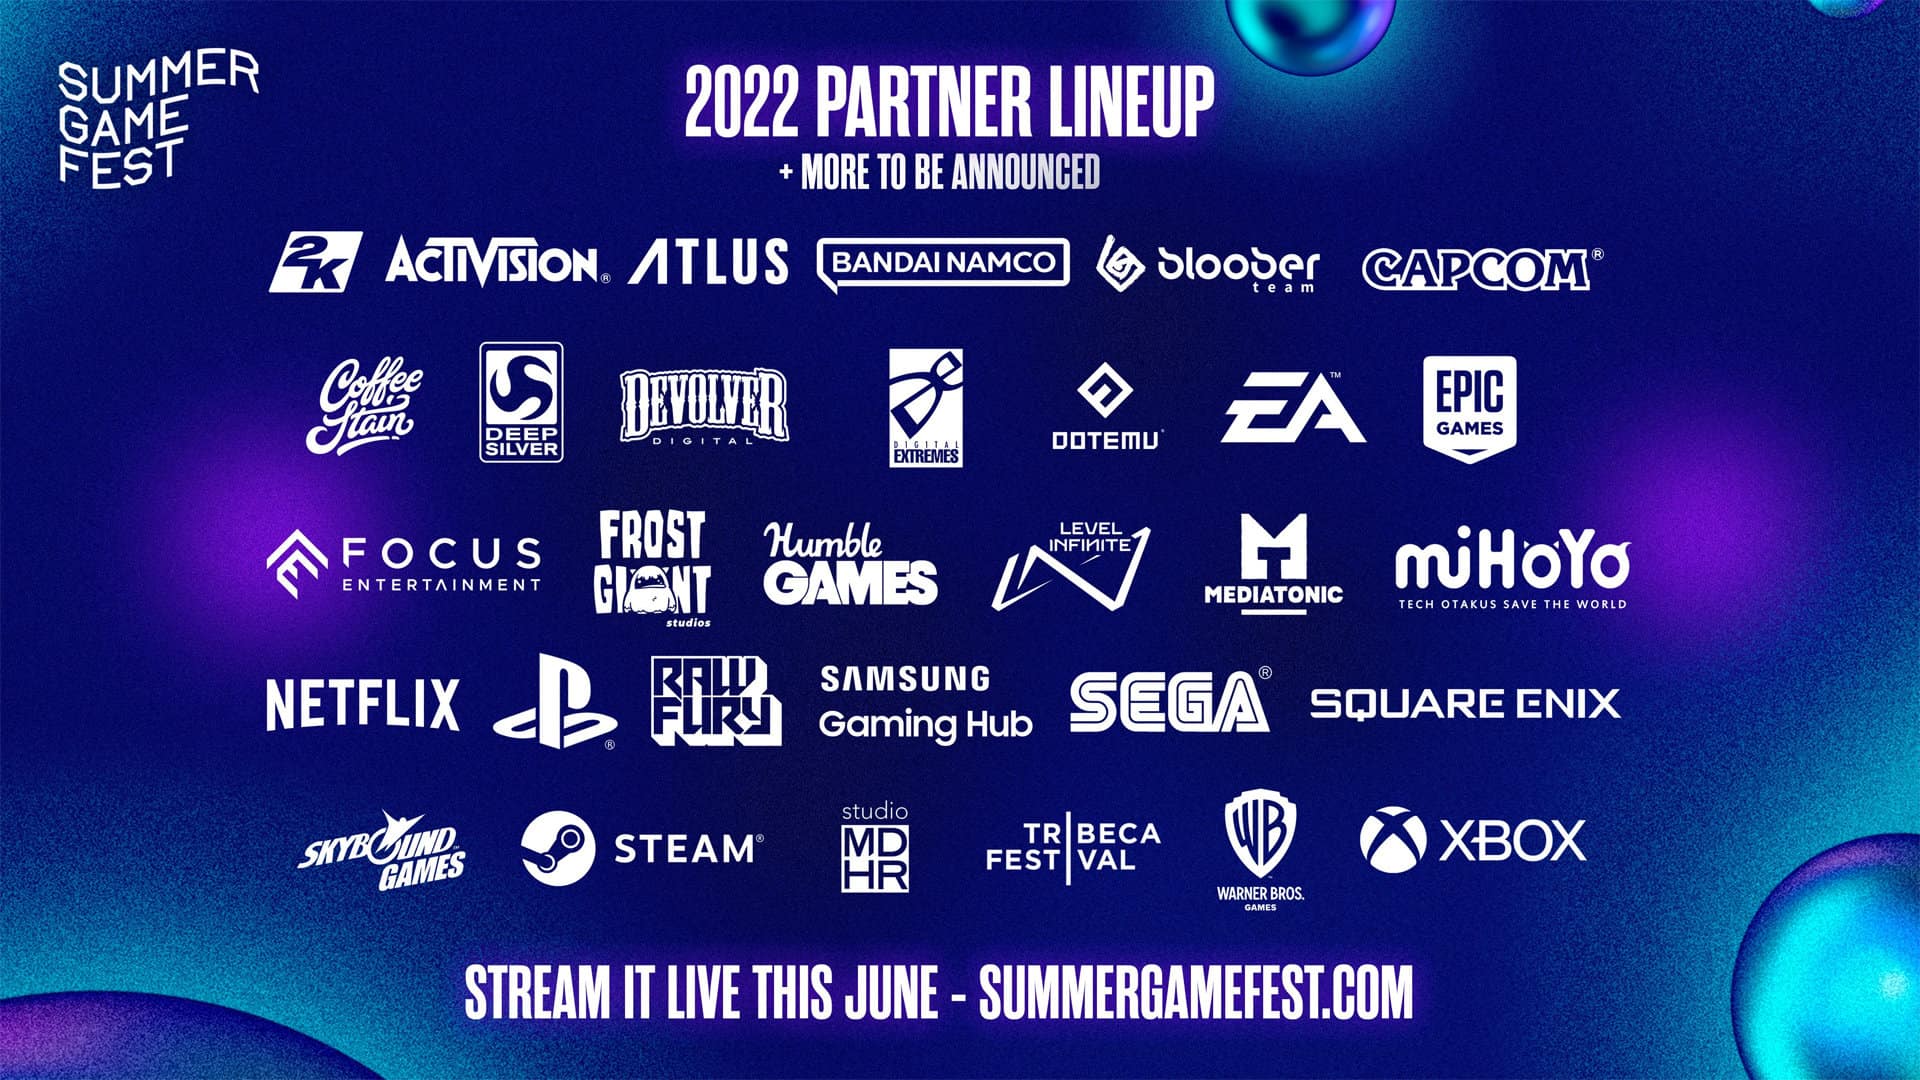 Summer Game Fest 2022 lineup